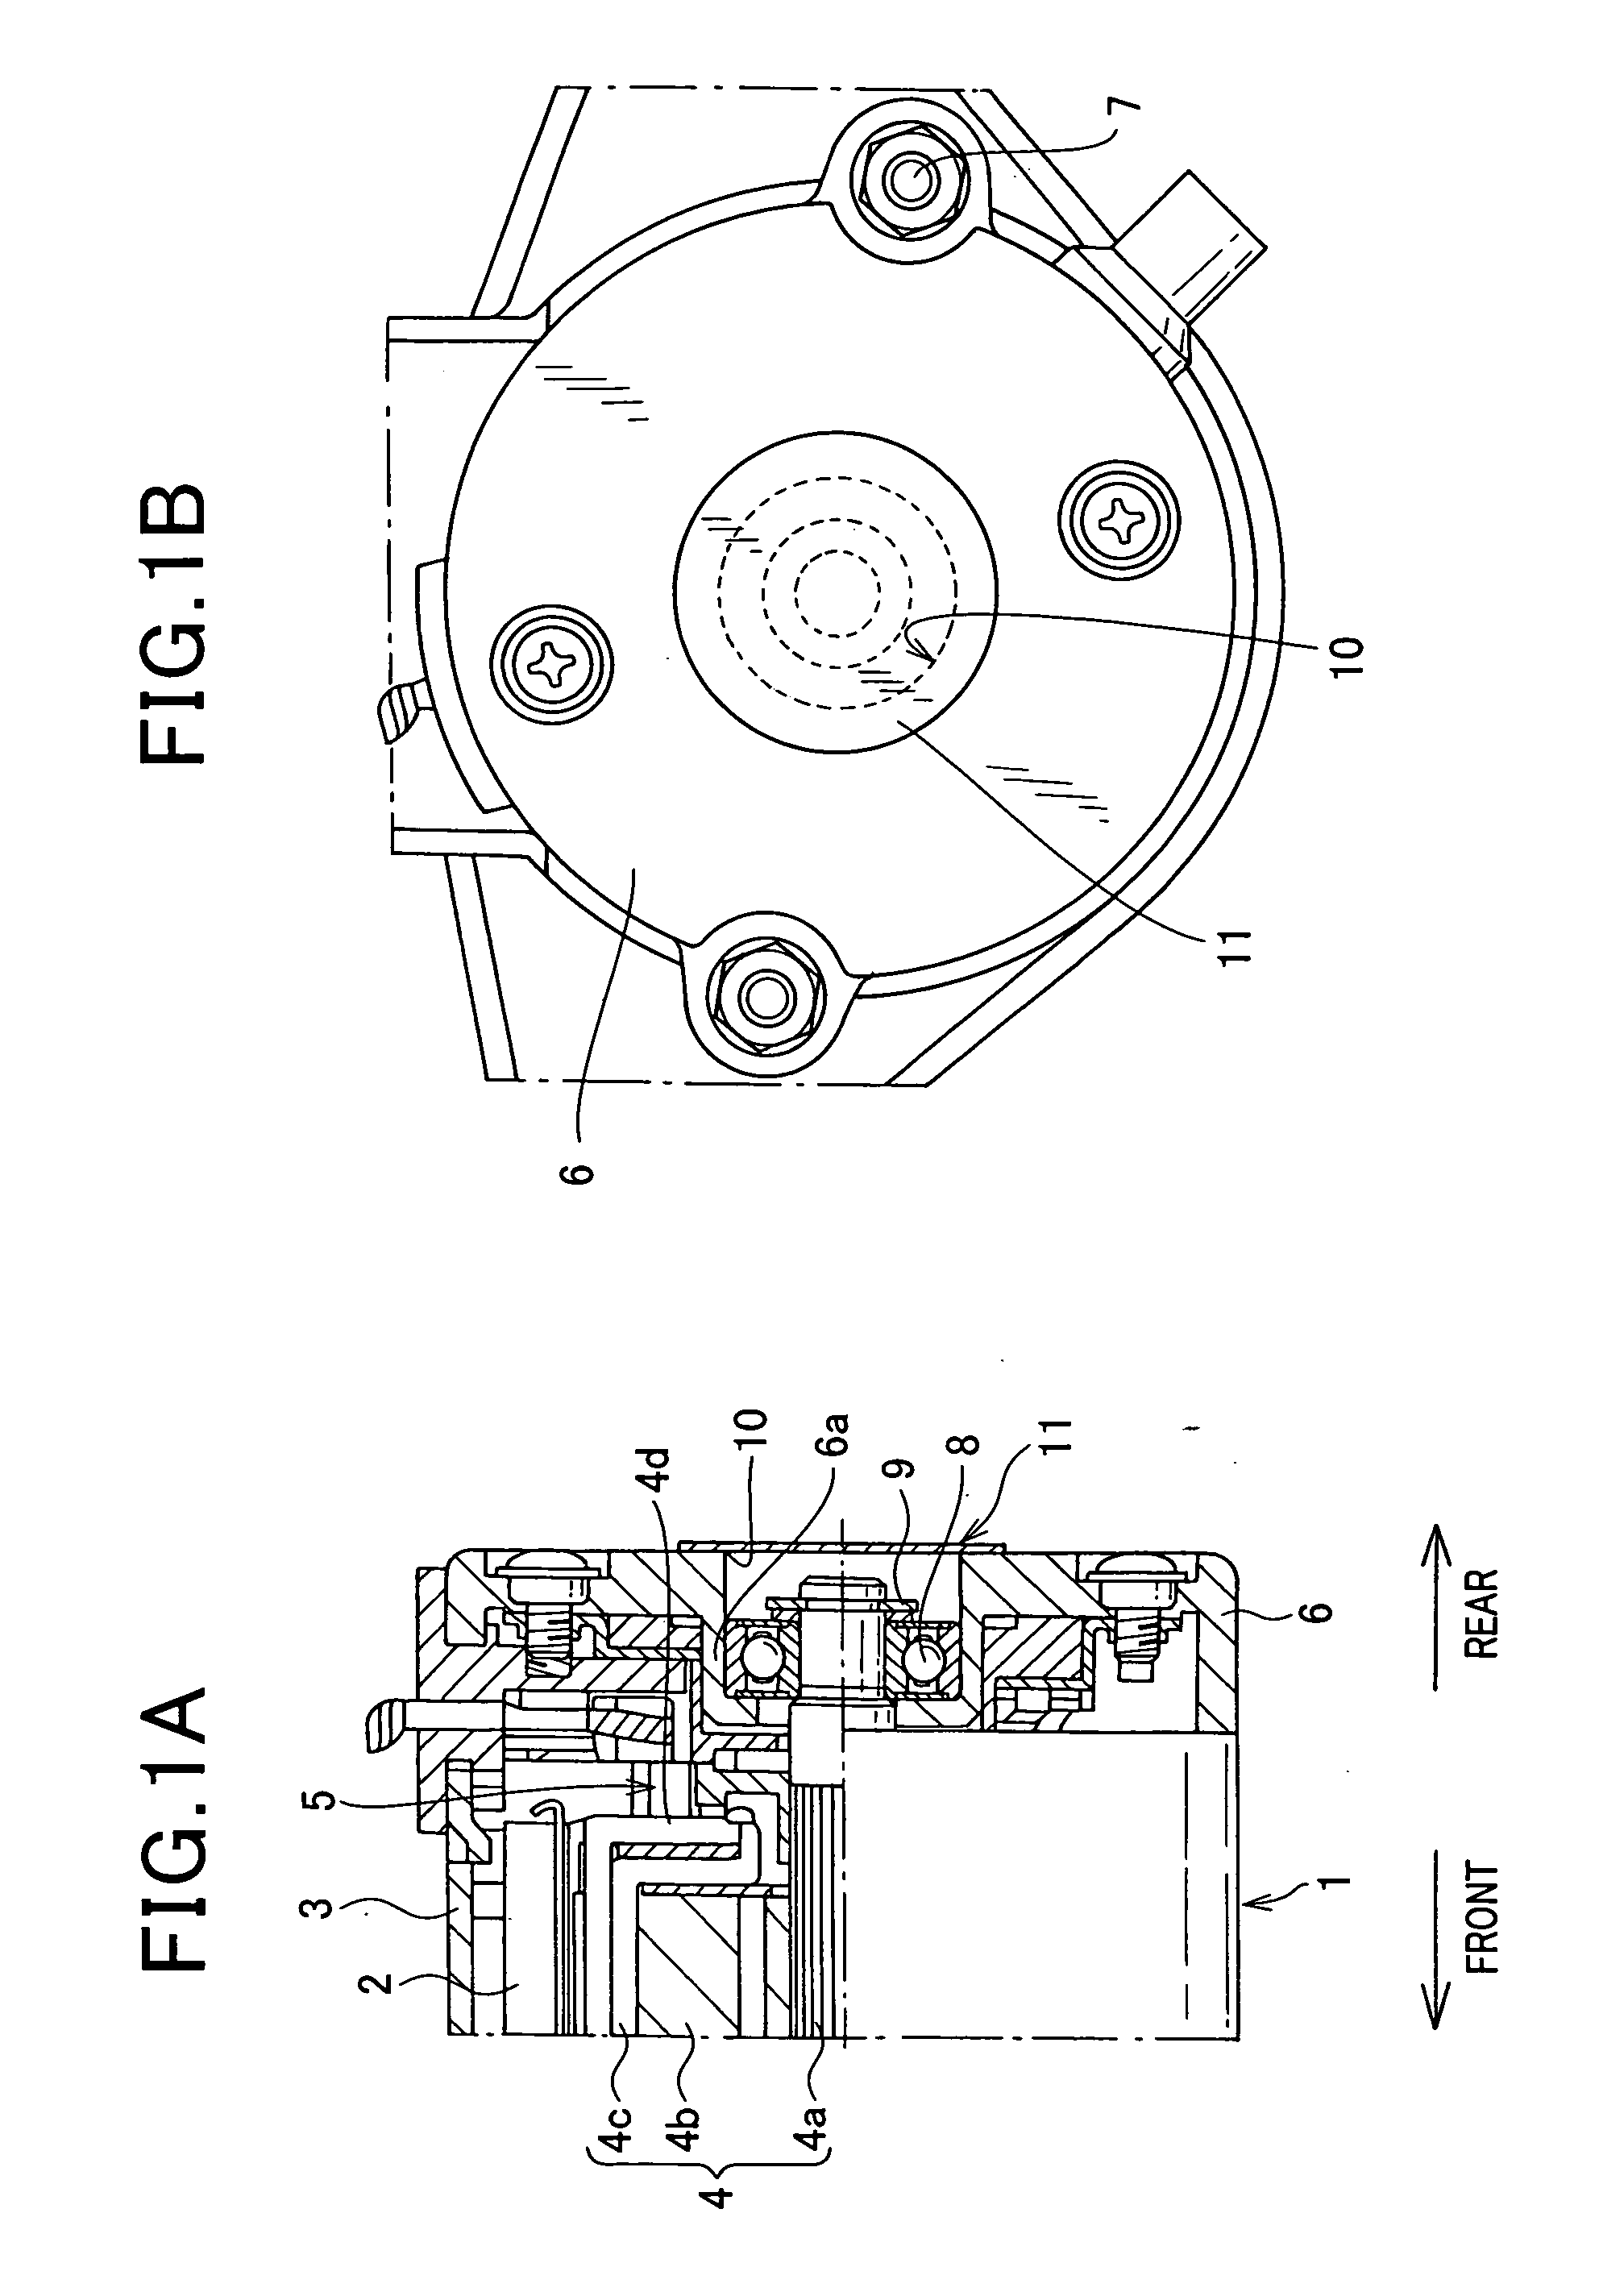 Starter motor having seal plate to seal bearing box formed in end frame